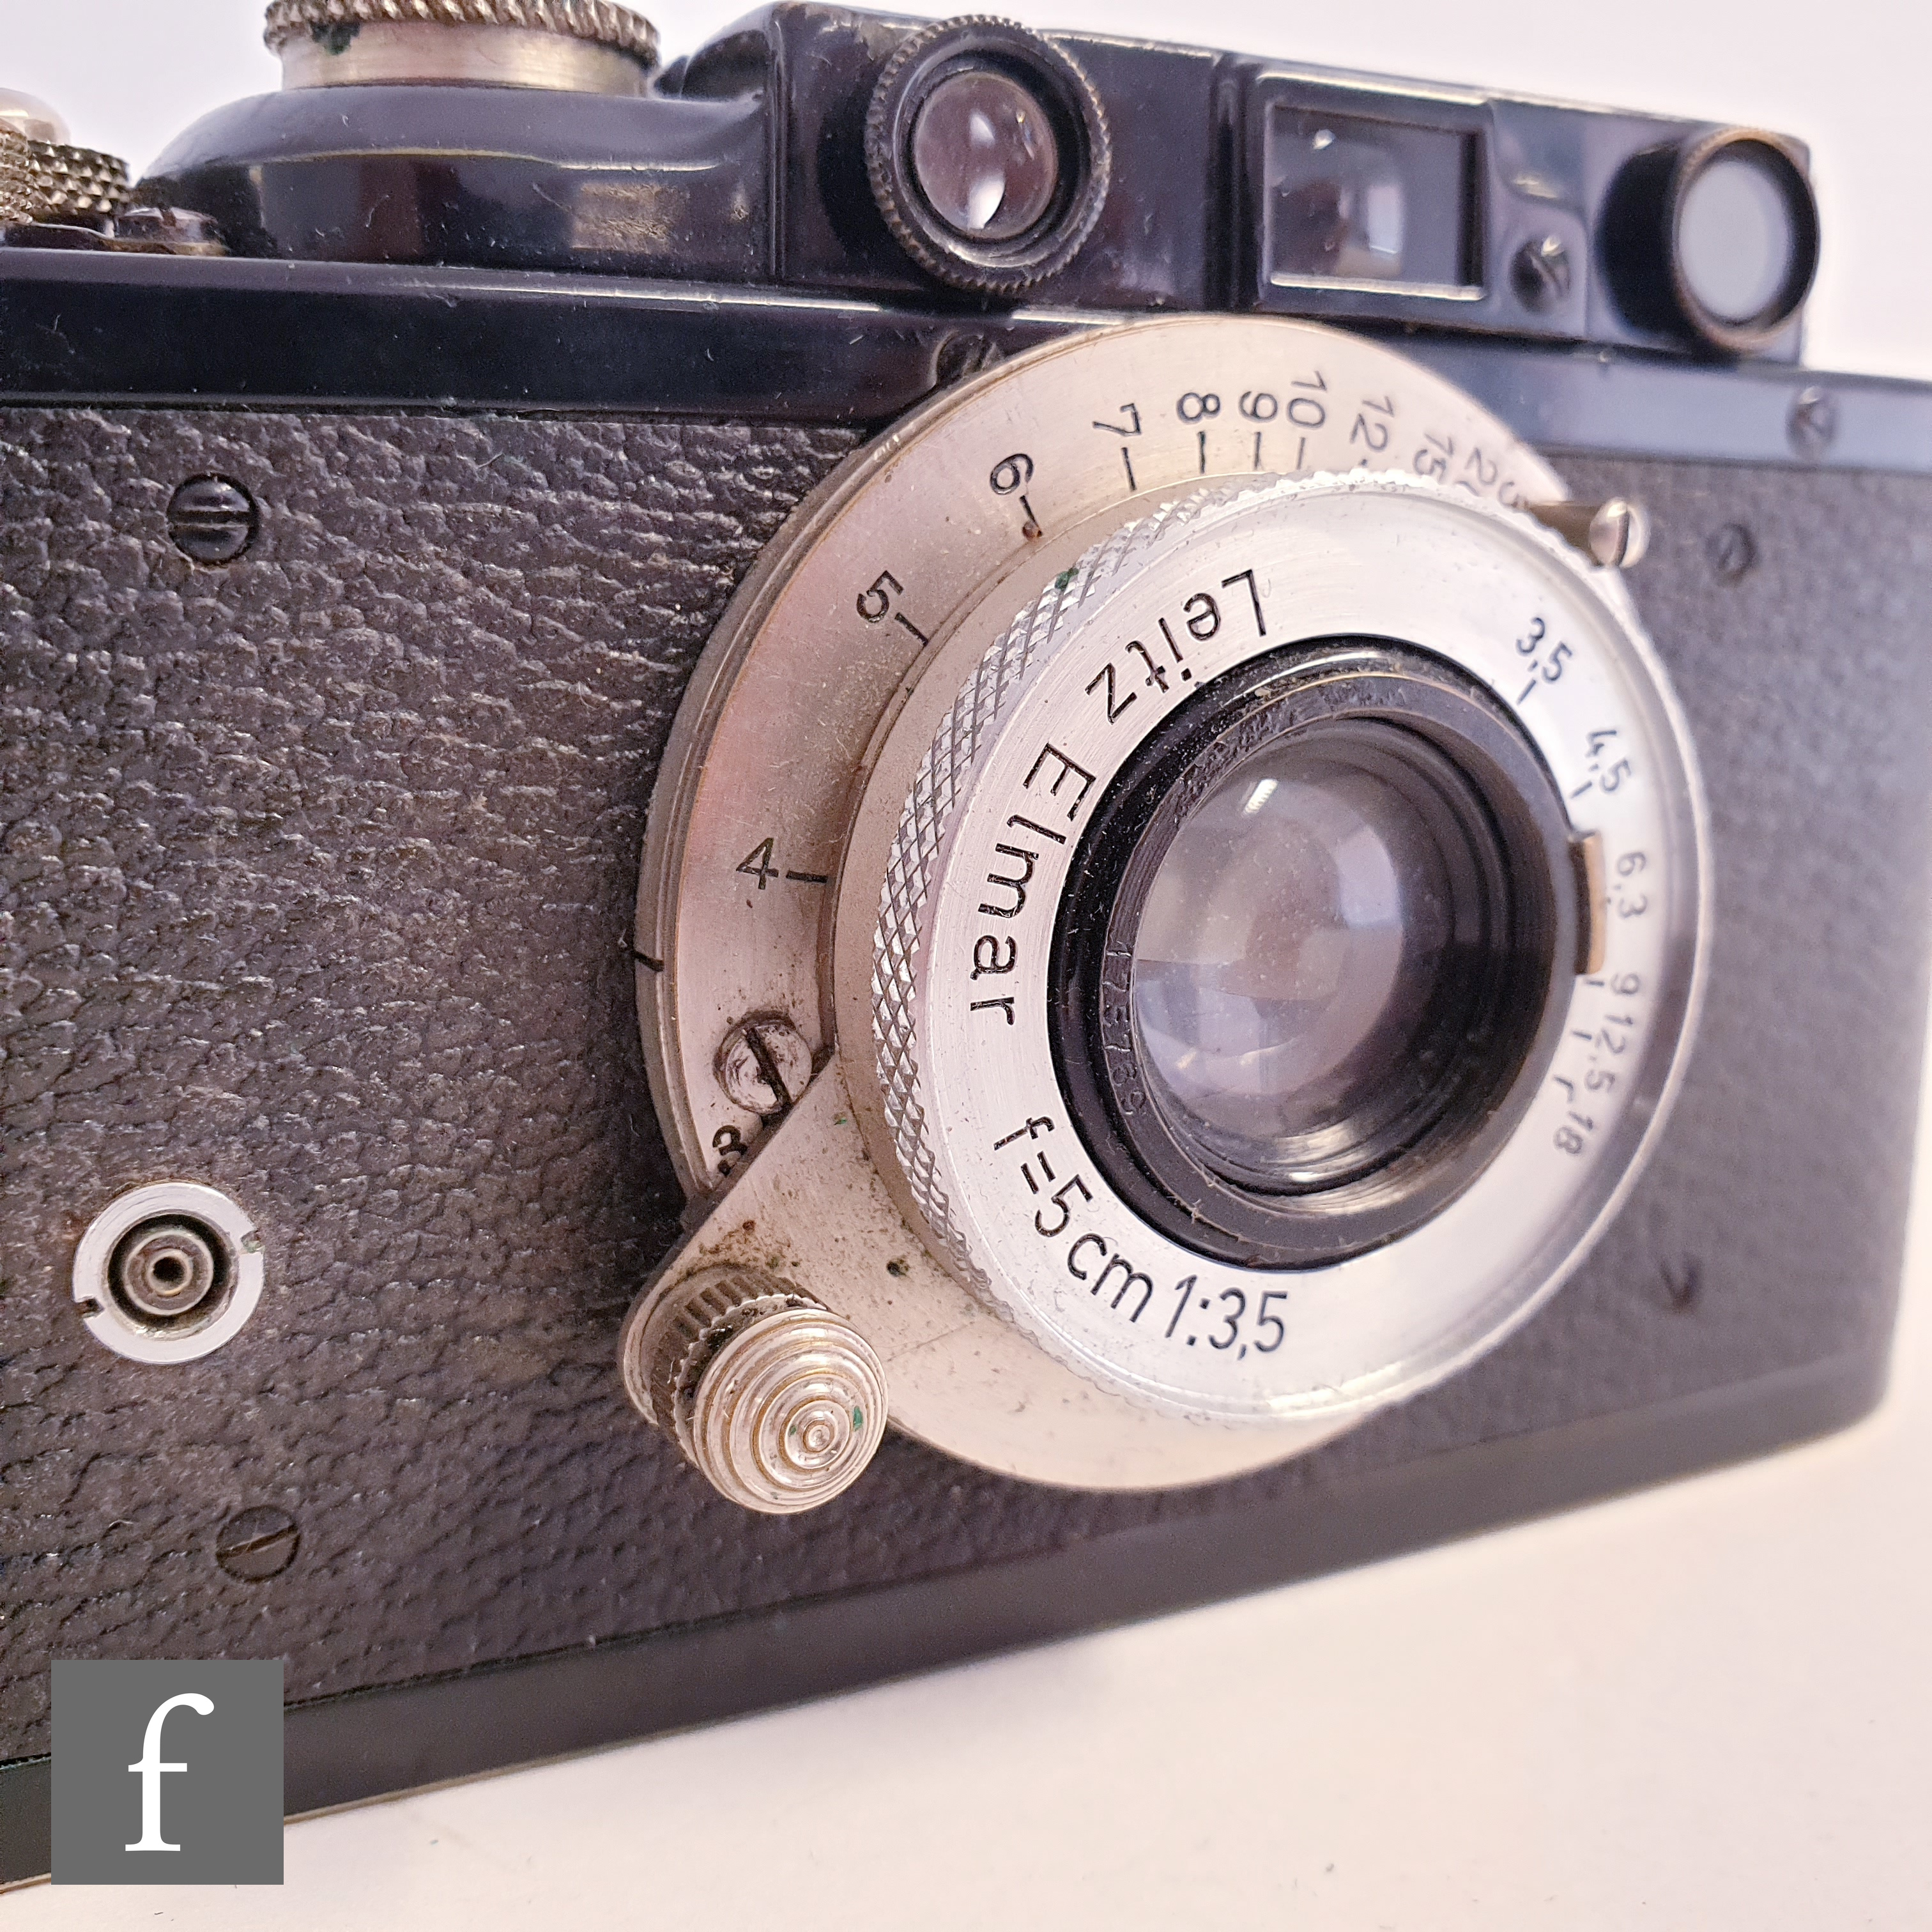 A Leica II rangefinder camera, circa 1933, black case, serial number 107155, with Leitz Elmar f= - Image 4 of 6